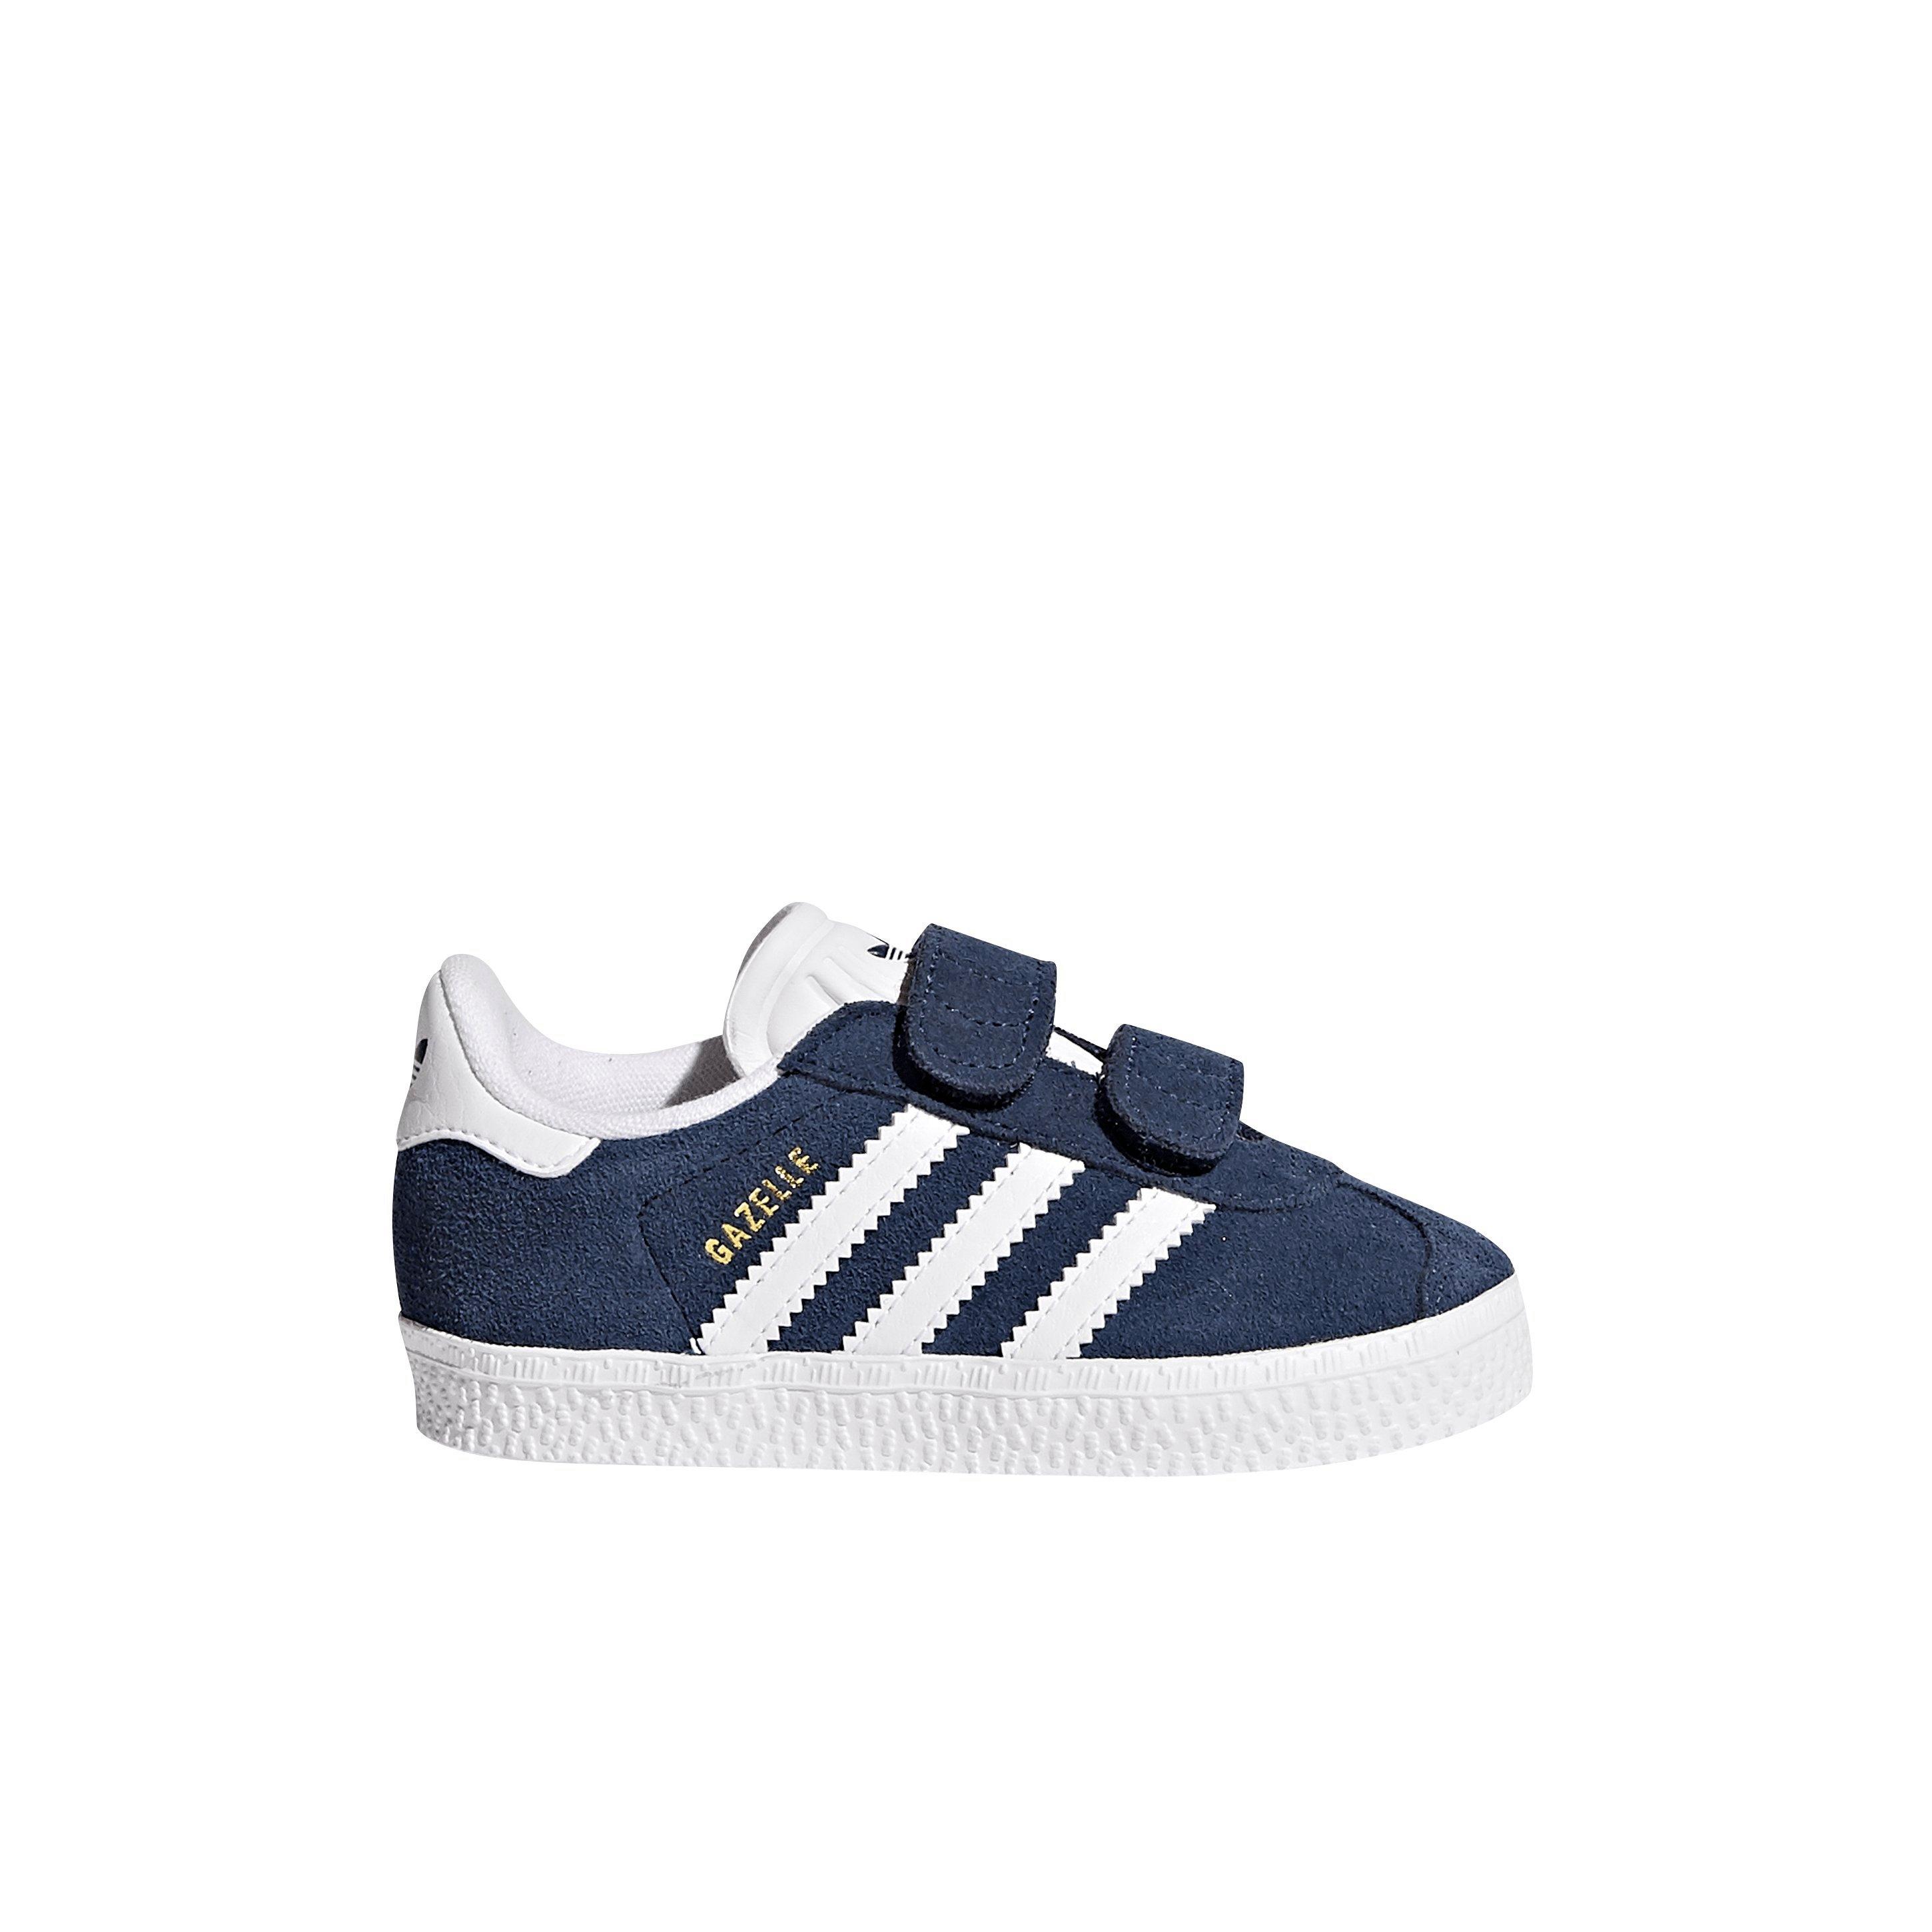 adidas Originals Gazelle "Collegiate Navy/Ftwr White/Ftwr White" Infant Boys' Shoe